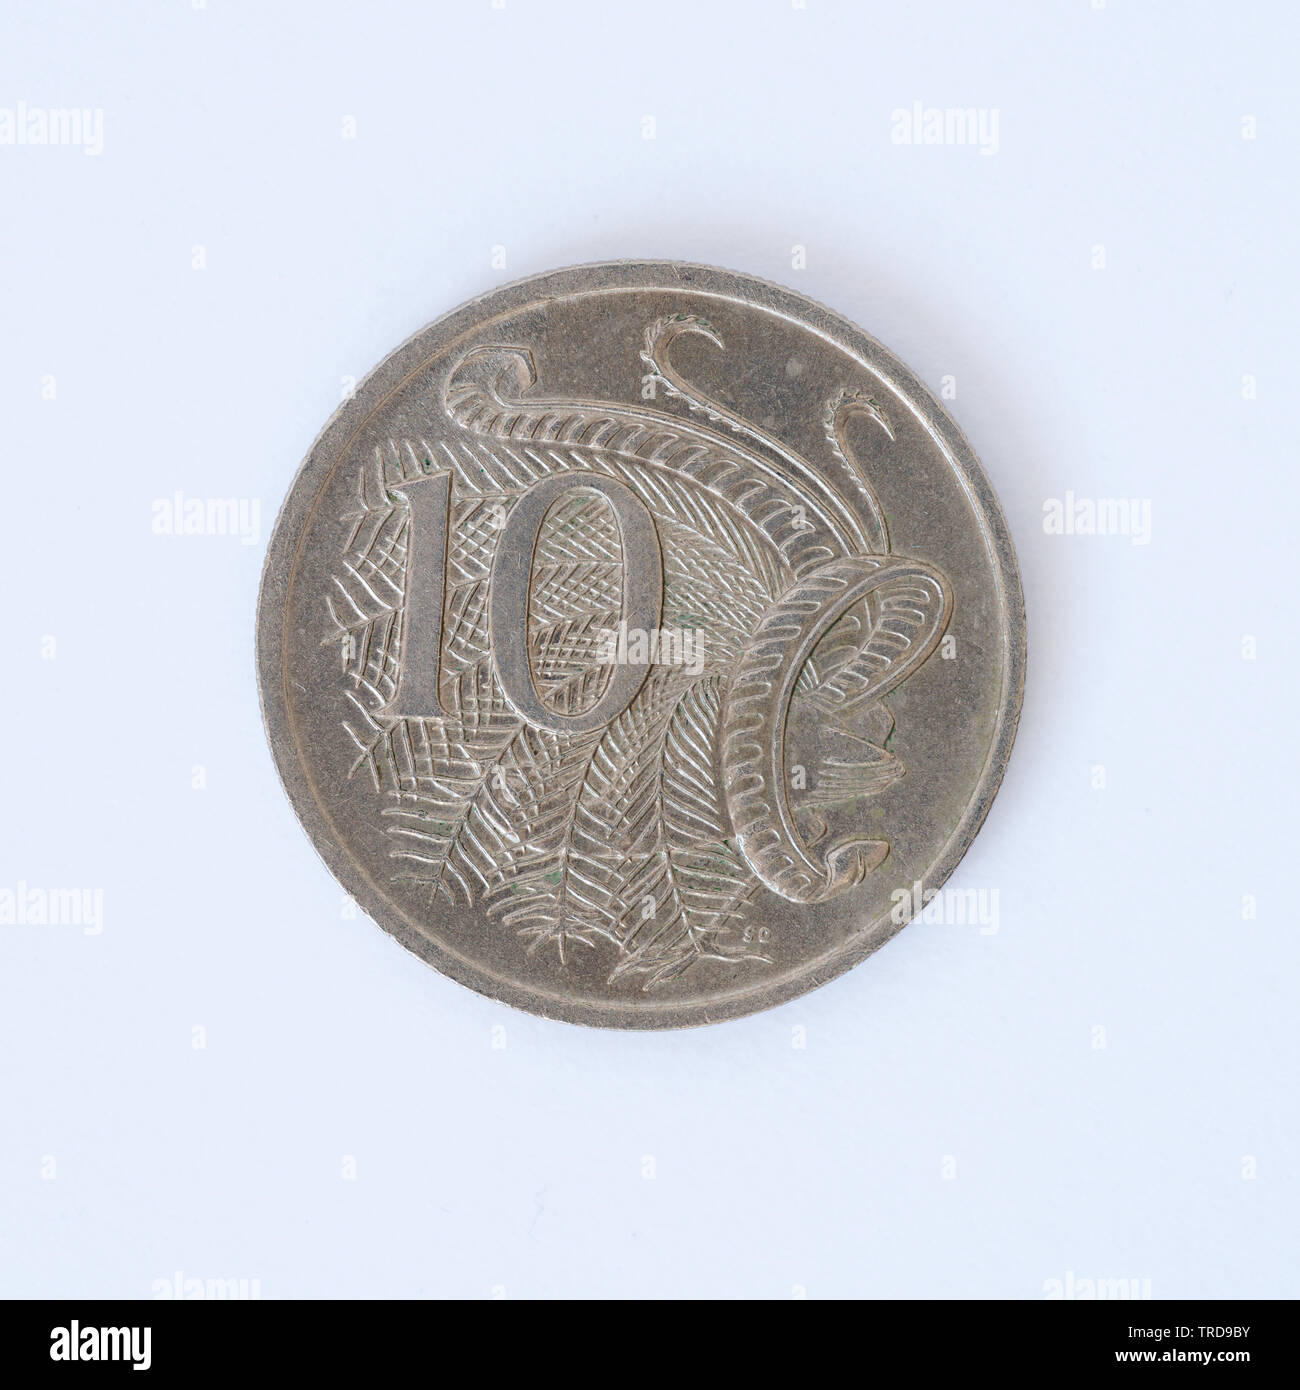 Australia 10 cents coin - 1976 Stock Photo